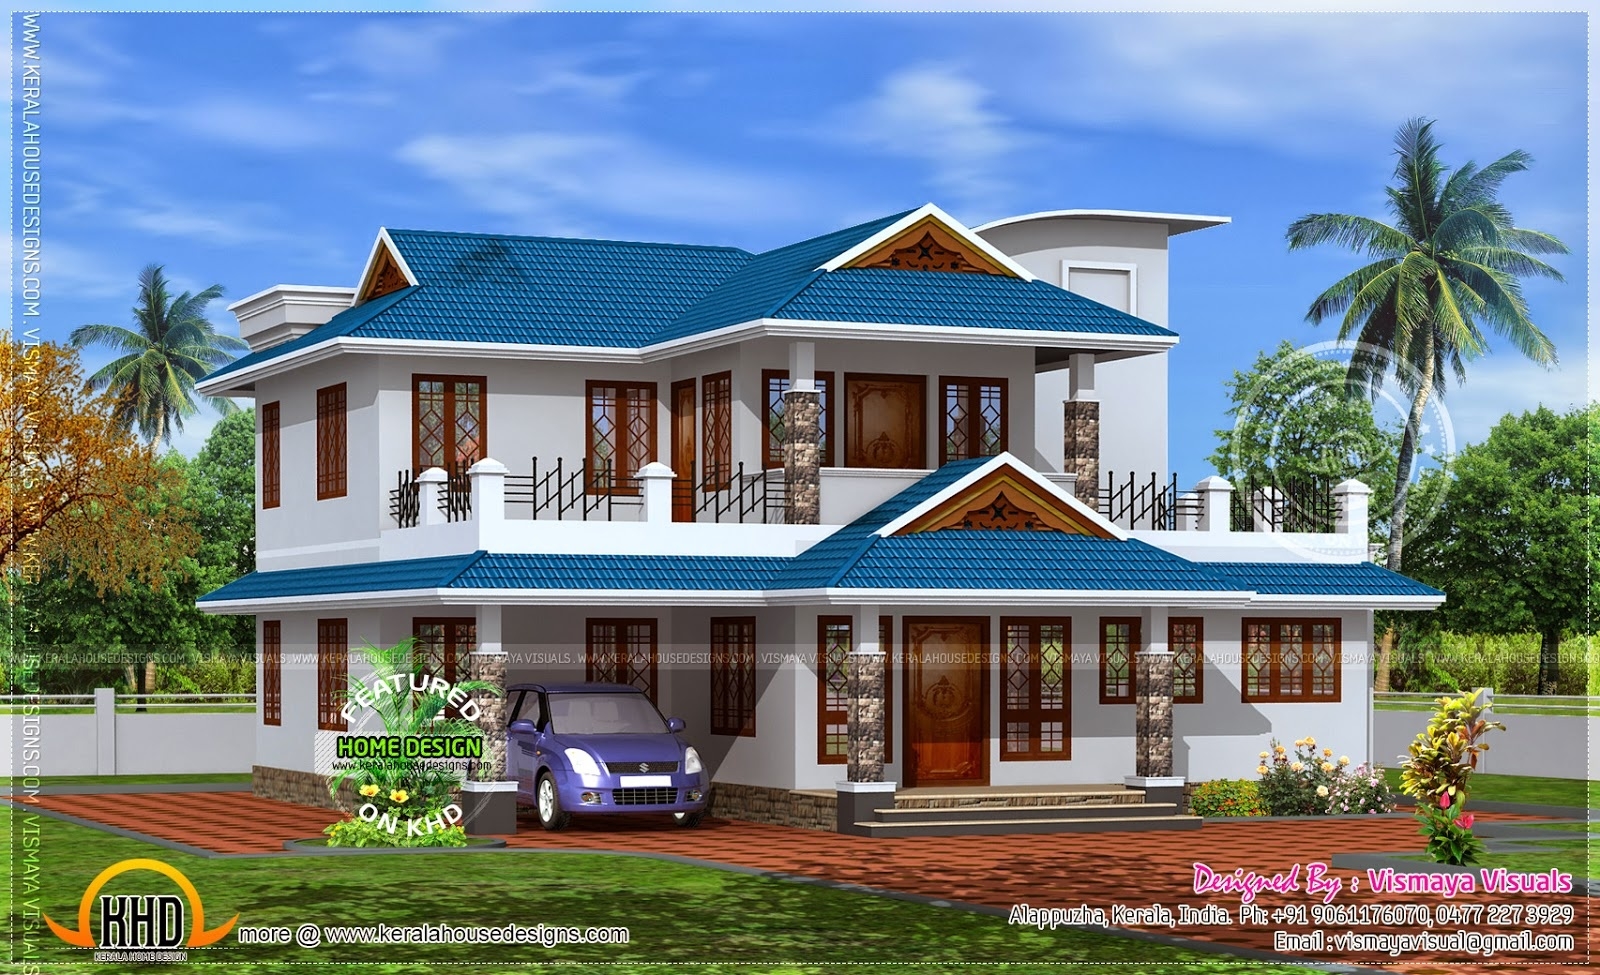 Mesmerizing 2350 sq feet home model in kerala kerala home design and floor plans within kerala homes models